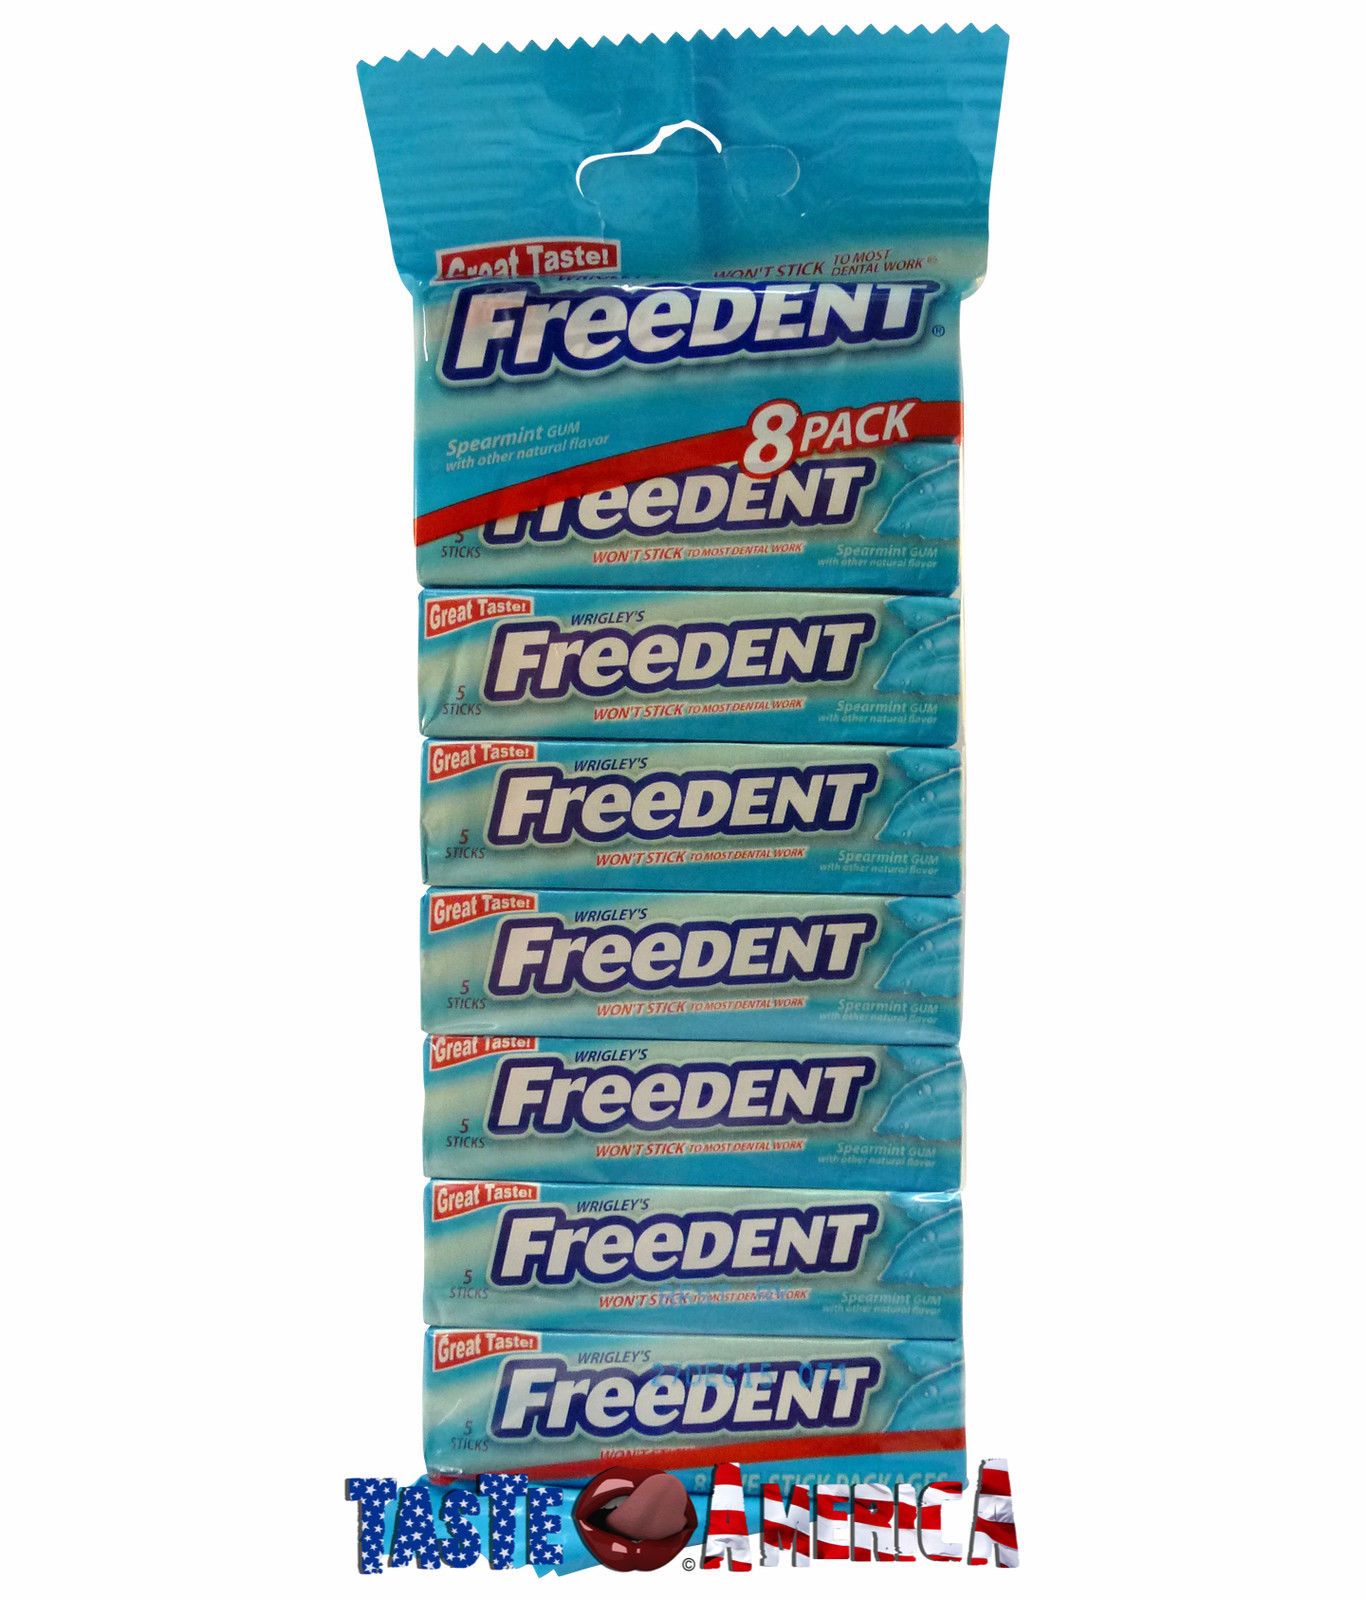 Wrigleys Freedent Spearmint Gum Case